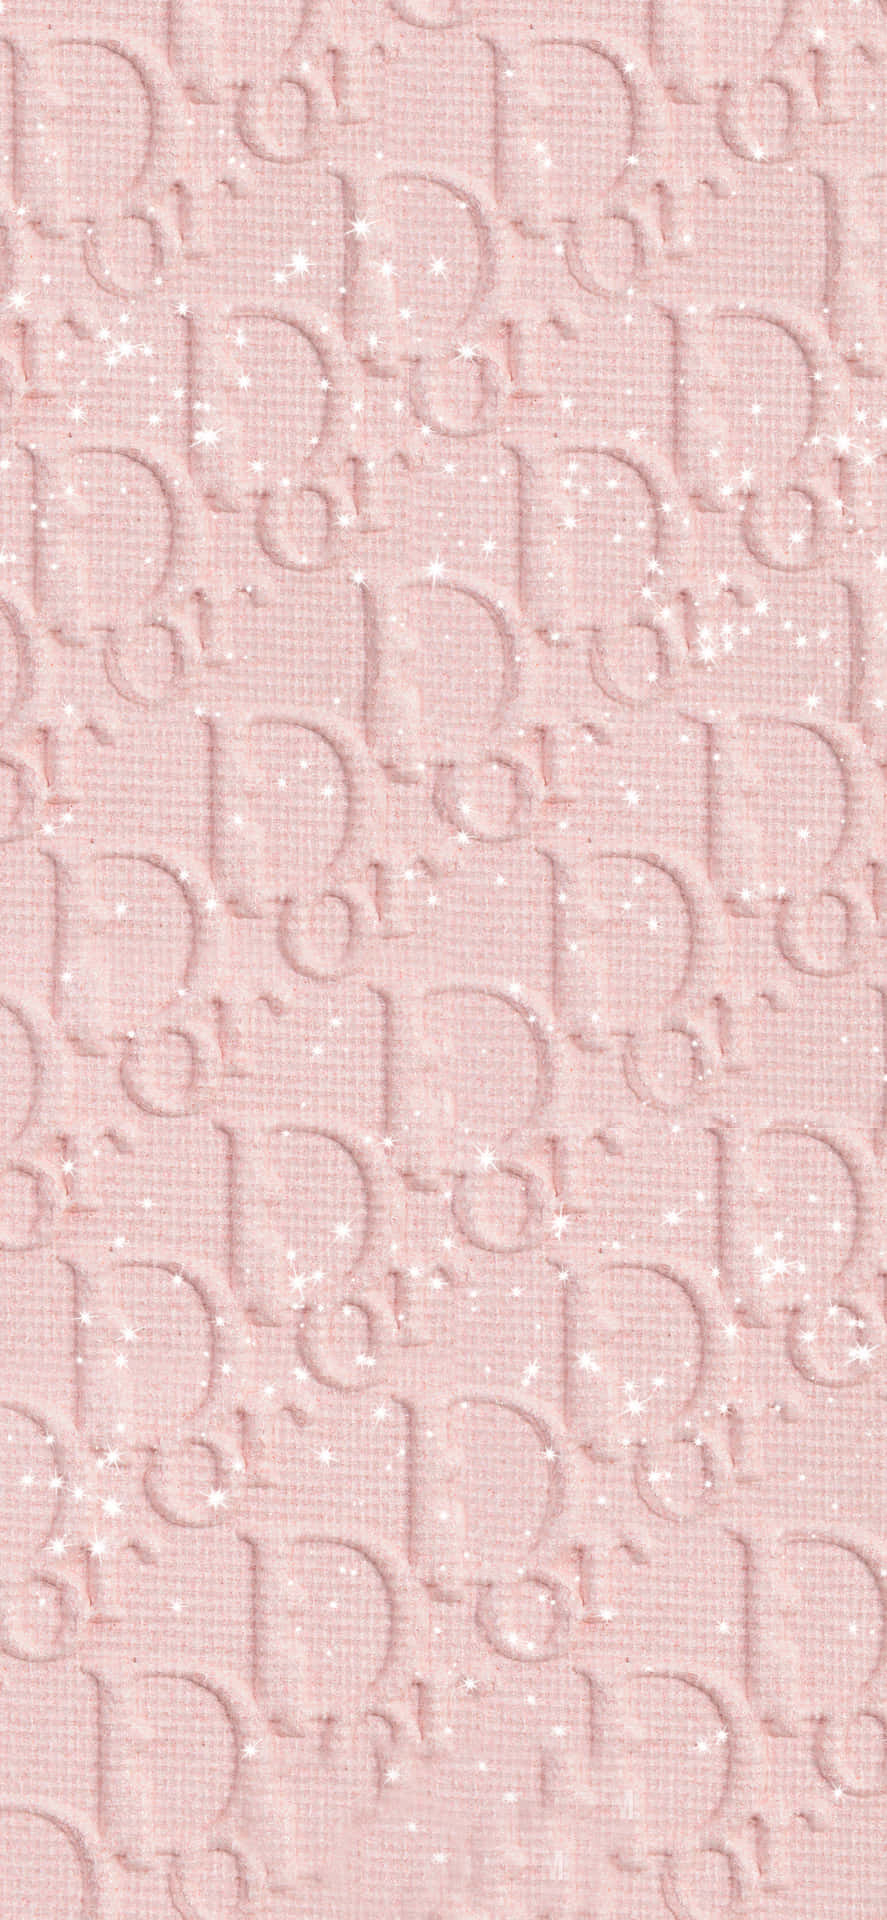 FREE Designer Girly Pink iPhone Wallpapers  Pink wallpaper girly Pink  wallpaper iphone Iphone wallpaper vintage